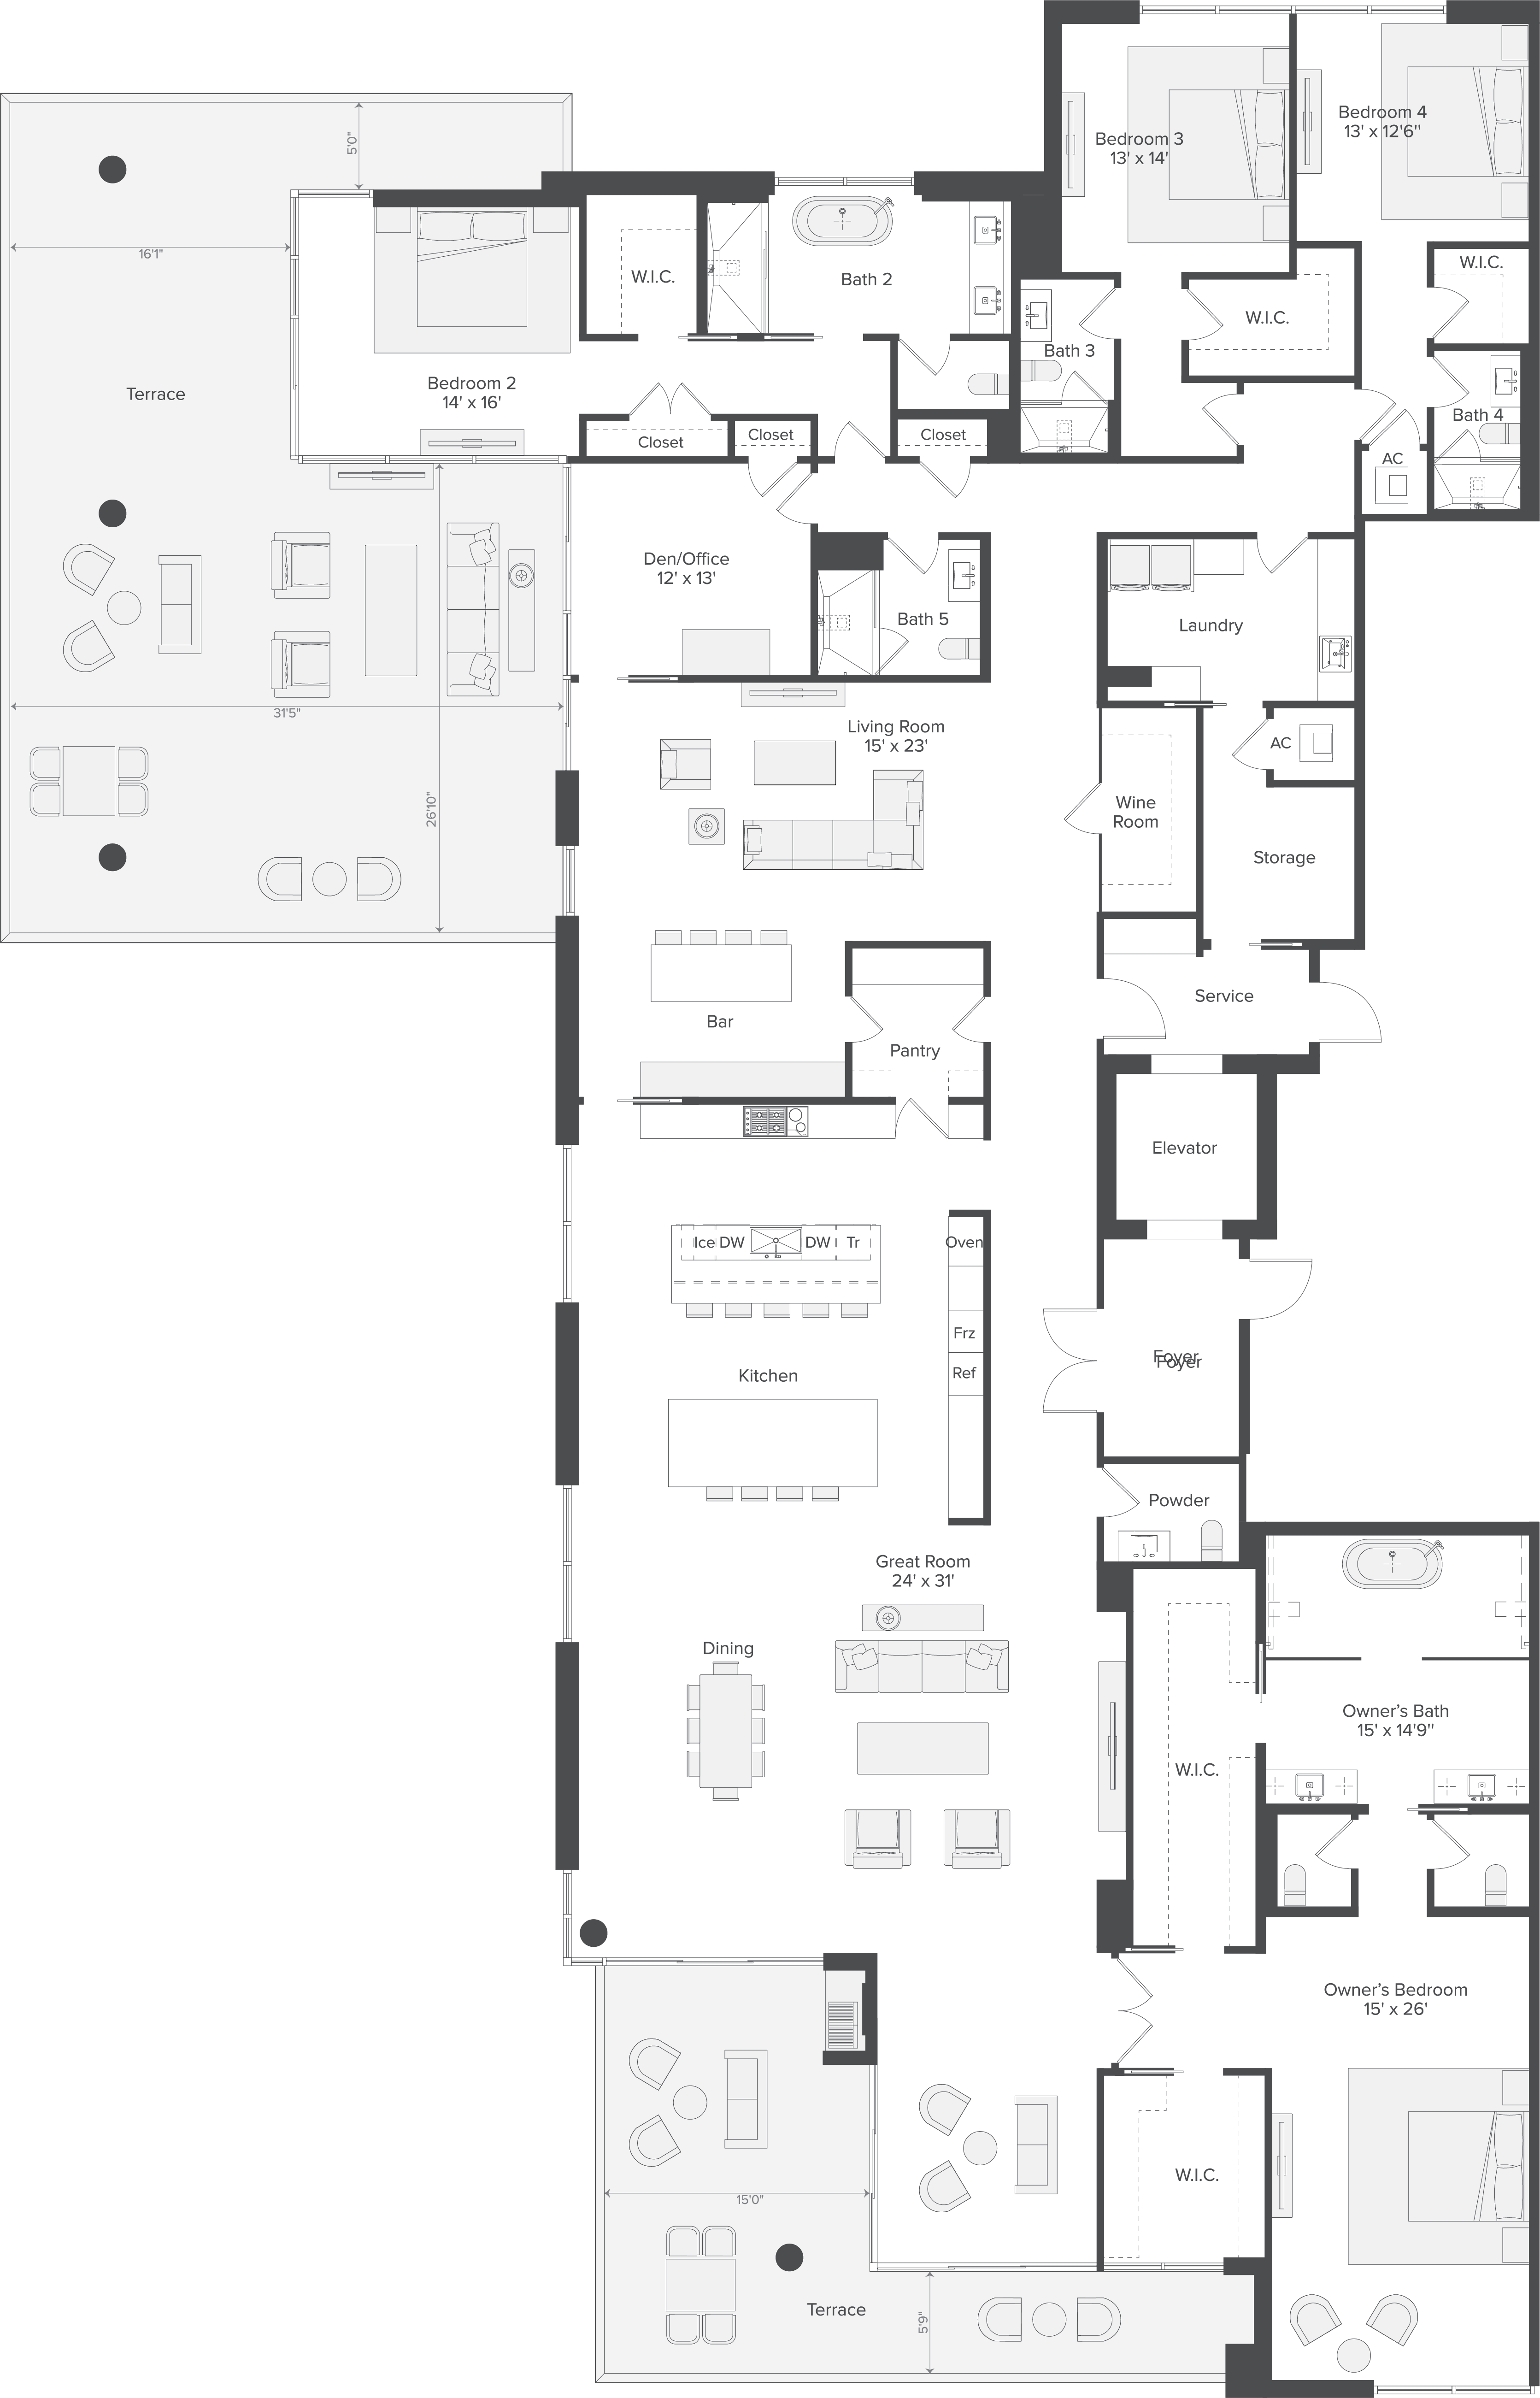 Penthouse B - Floorplan Image